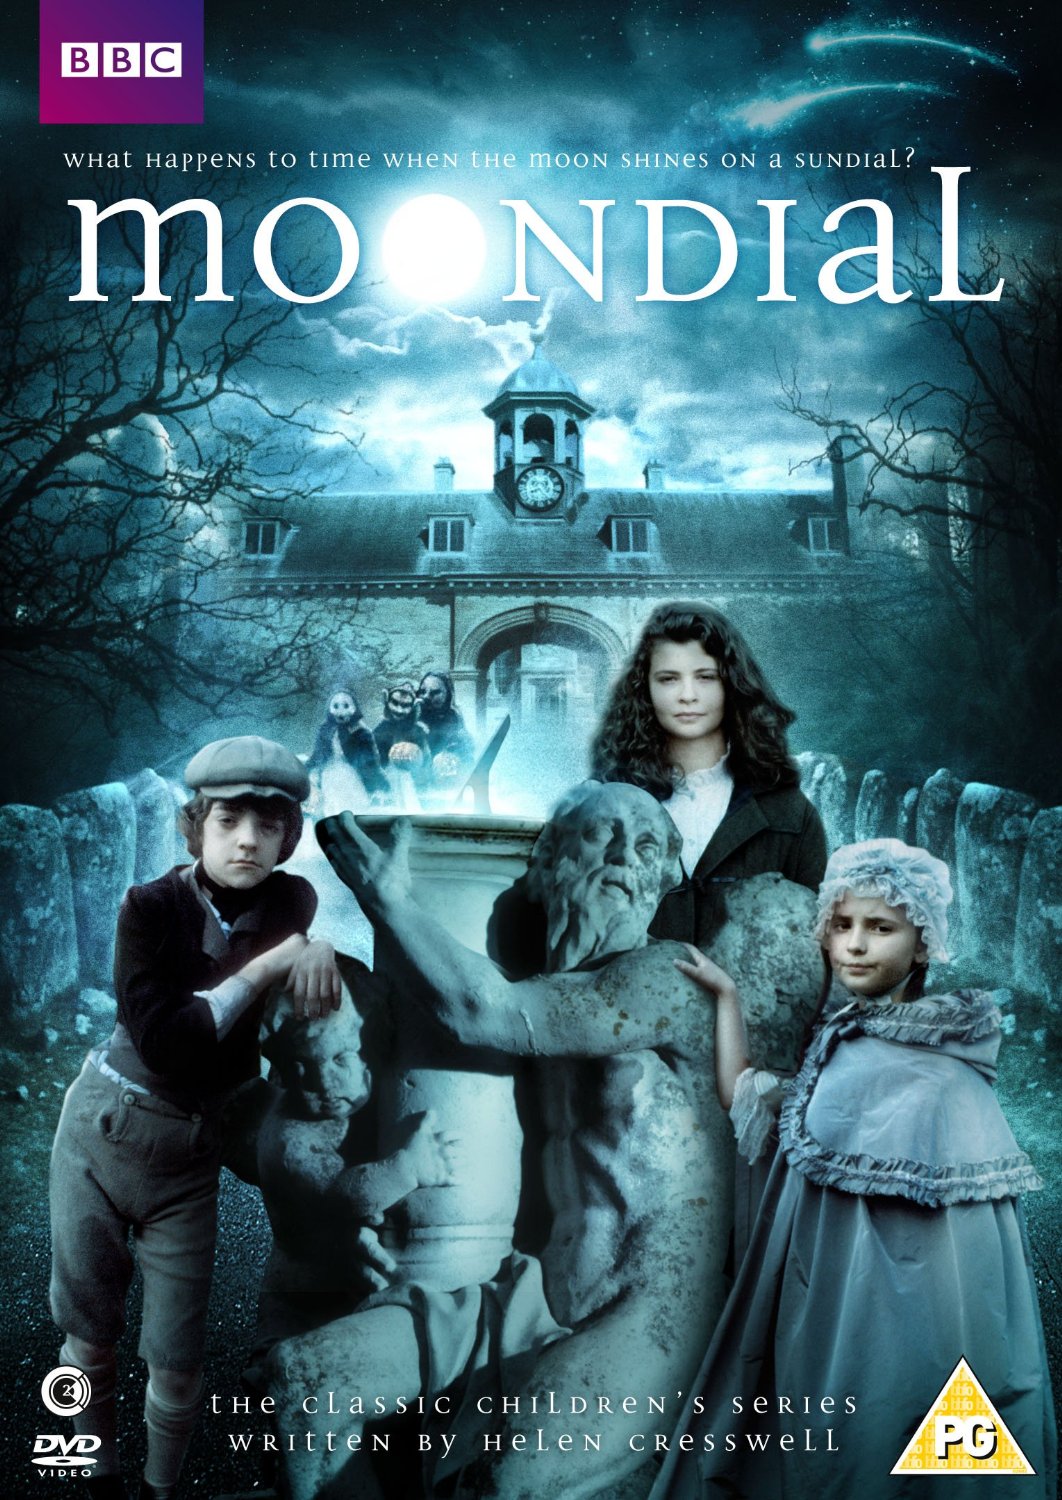 Moondial DVD review: the BBC children’s classic returns